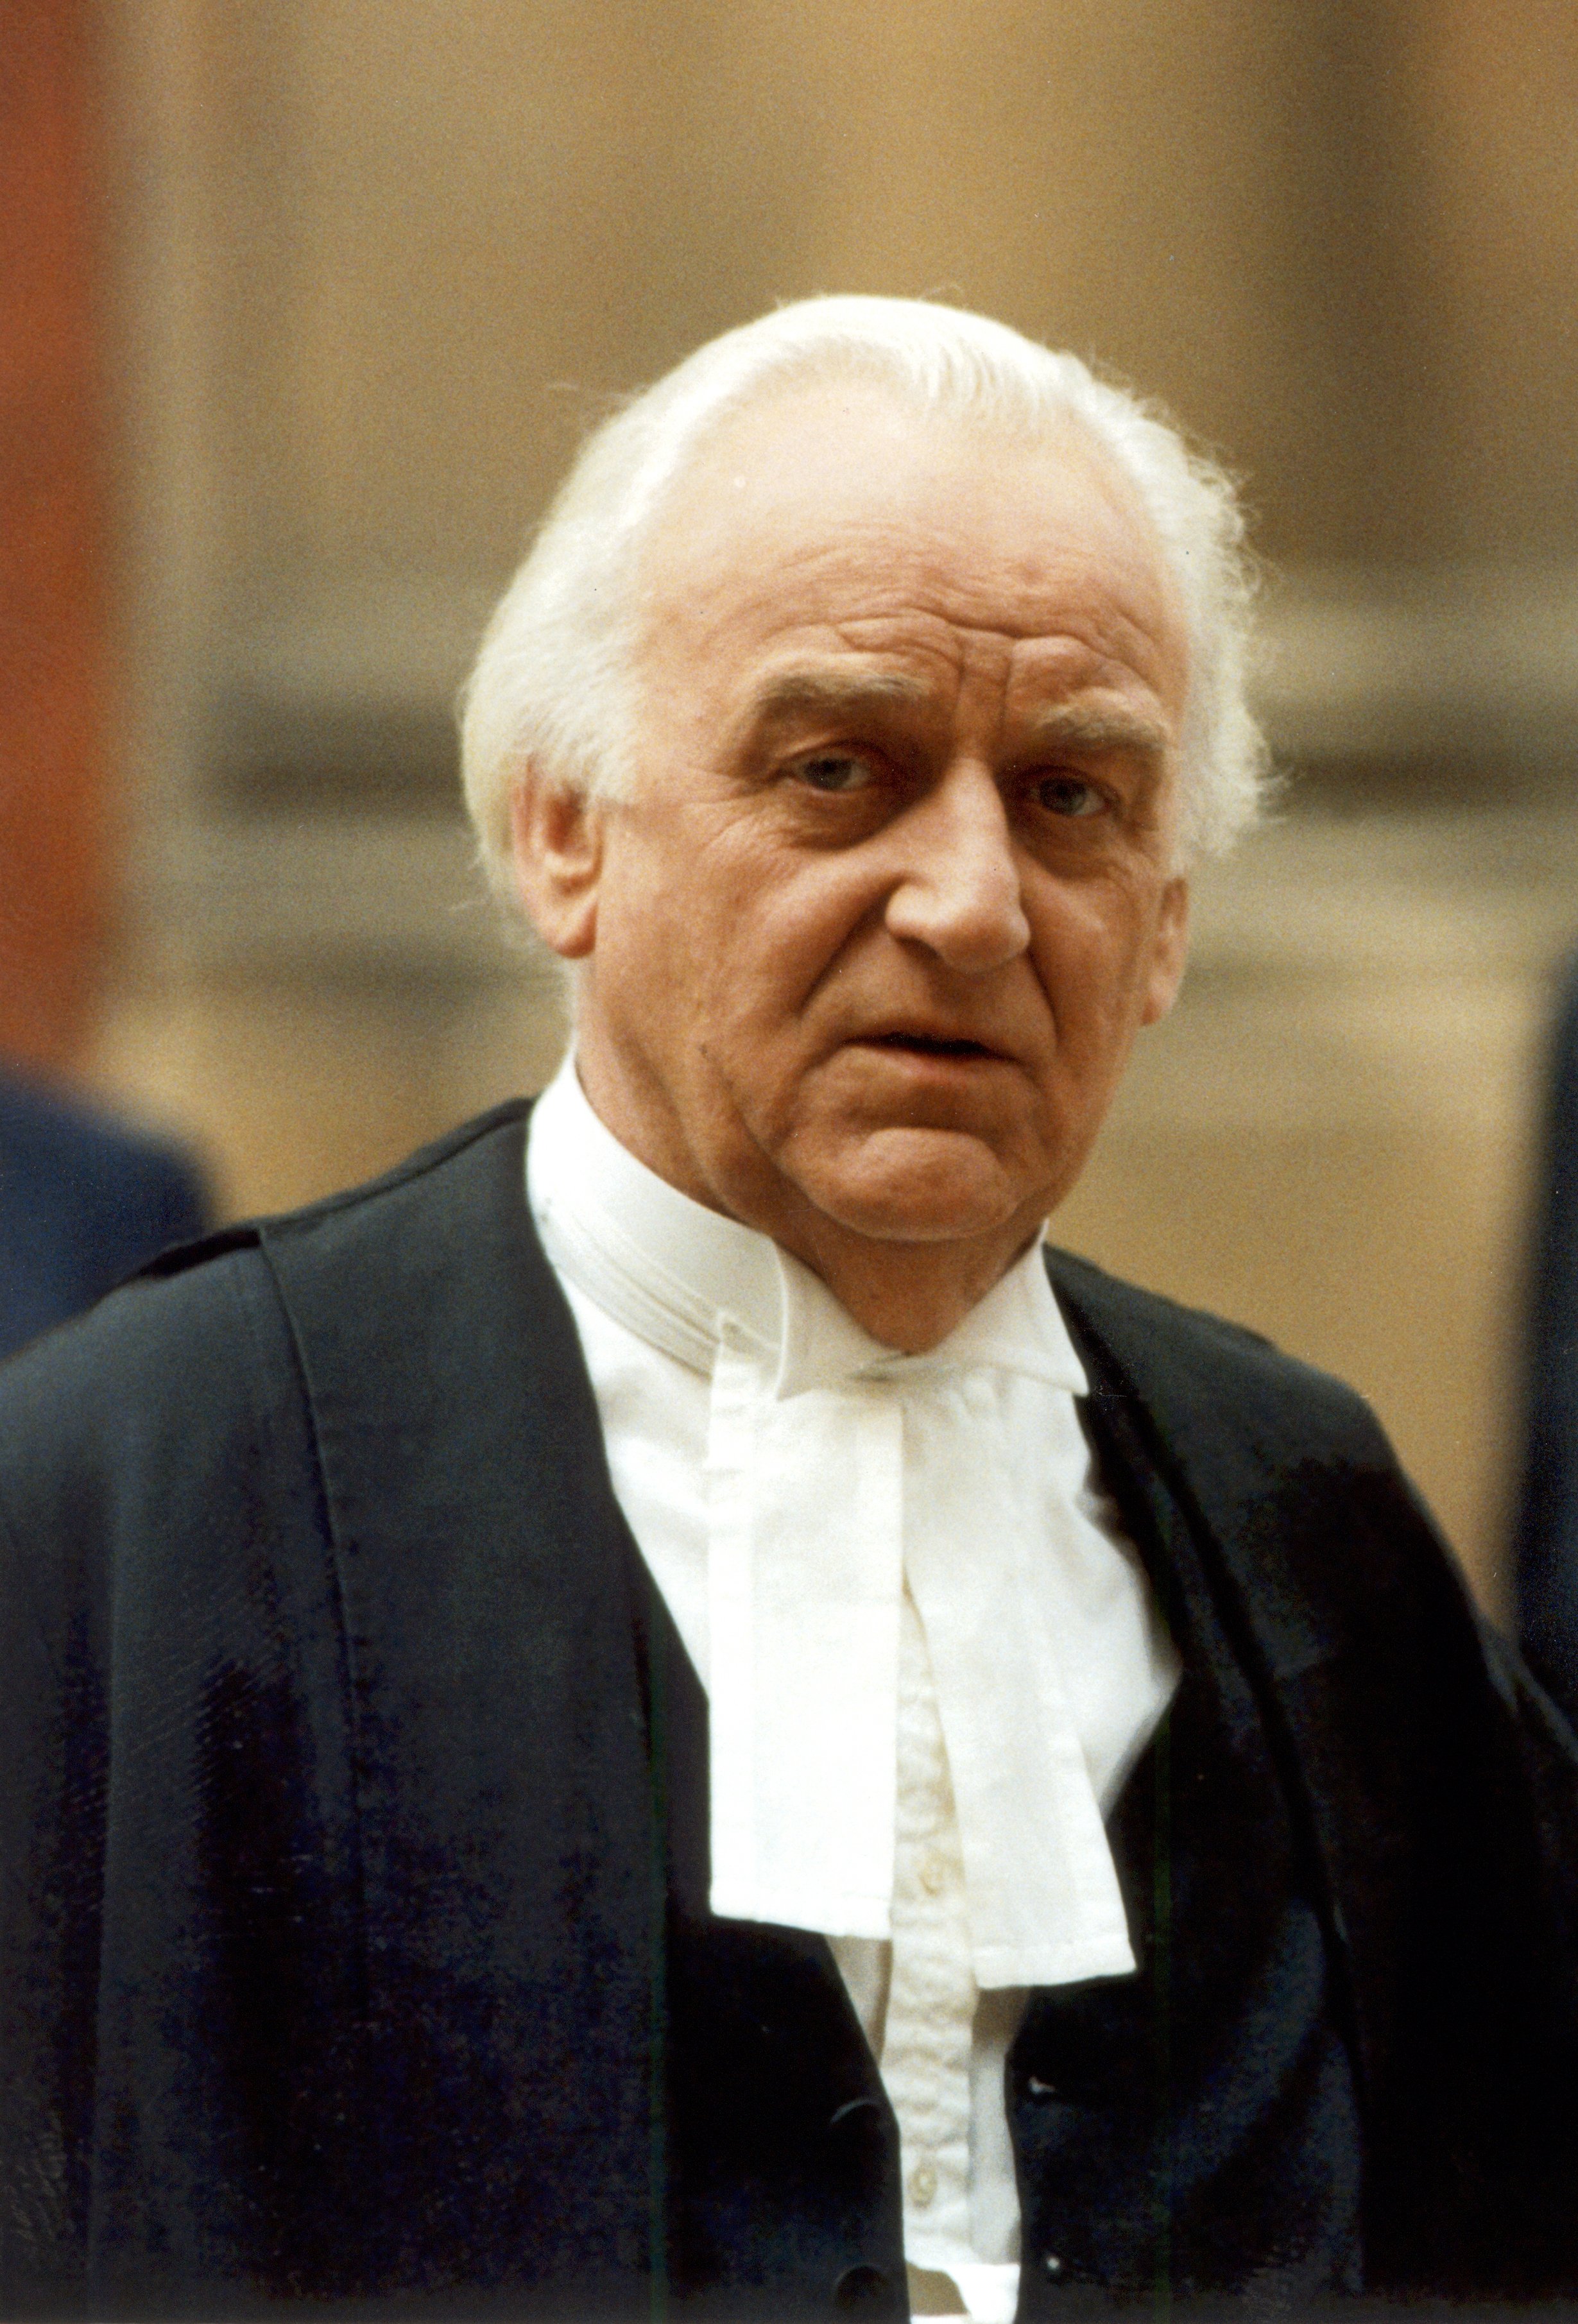  John Thaw (1942 - 2002) as barrister James Kavanagh in the TV drama series 'Kavanagh QC', circa 1997 | Photo: Getty Images